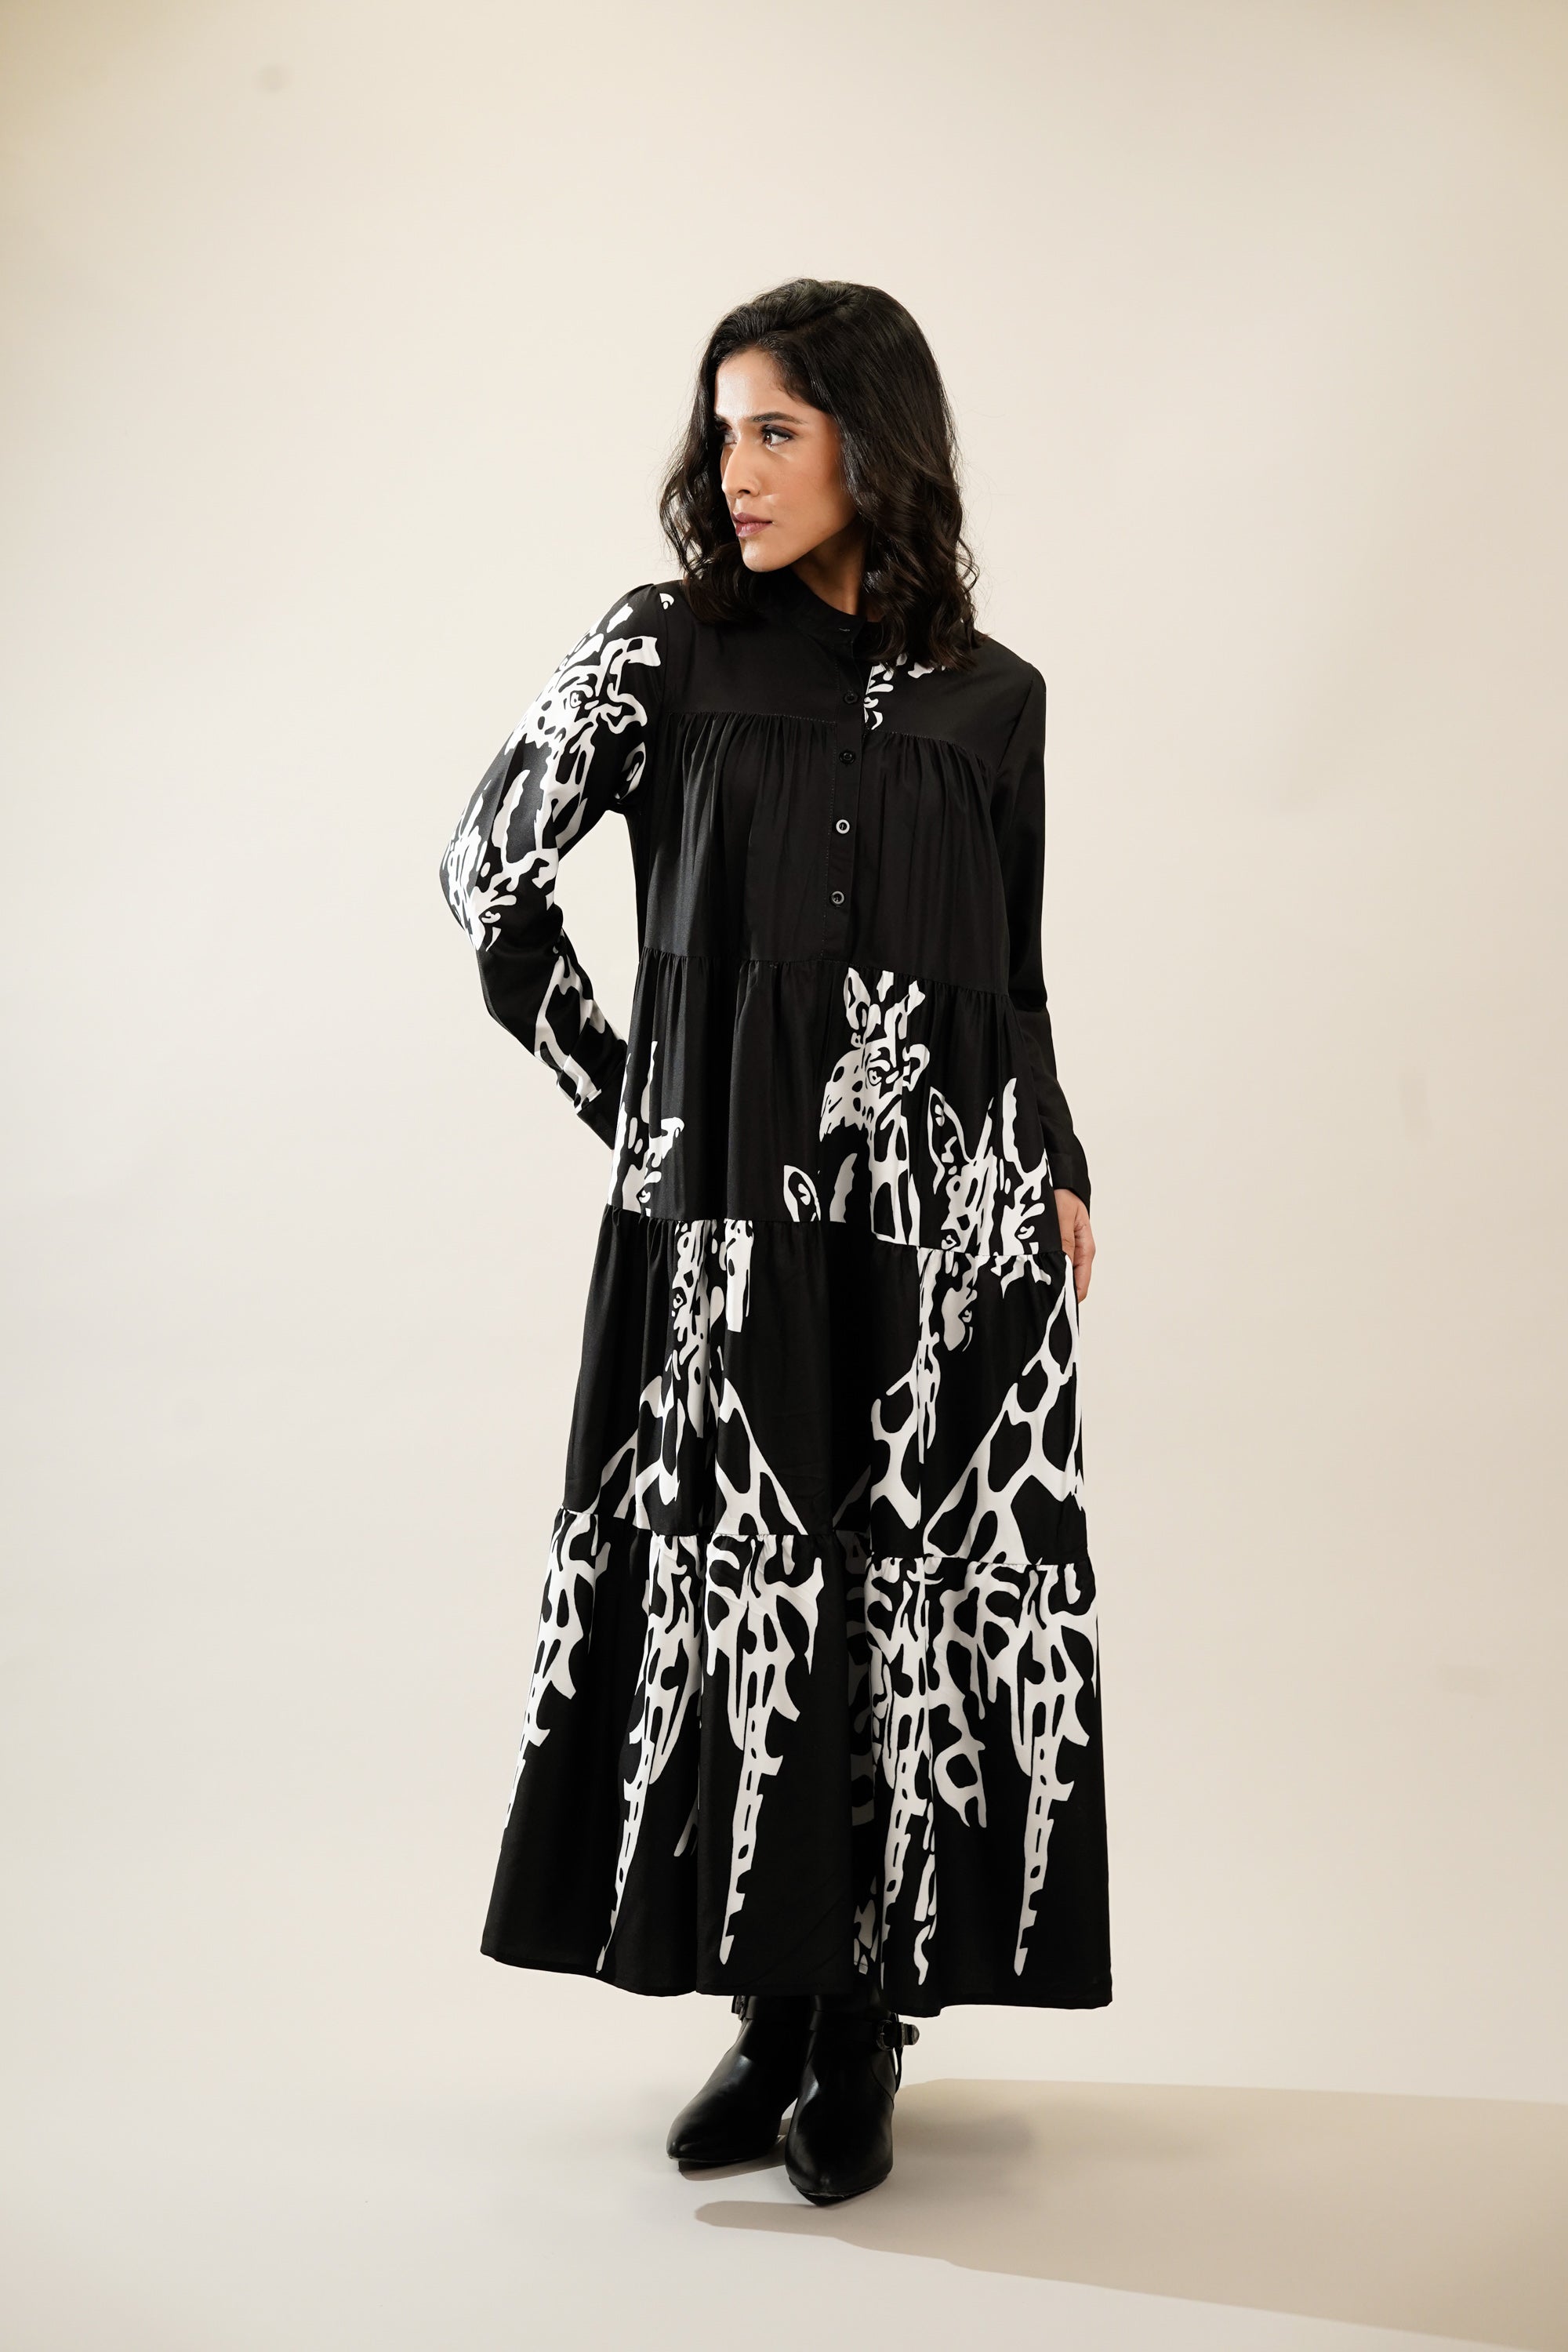 Buy Lymio Women's Regular Beige Color Round Neck Half Sleeve Polyester  Digital Print Dress (491-Beige-XS) at Amazon.in